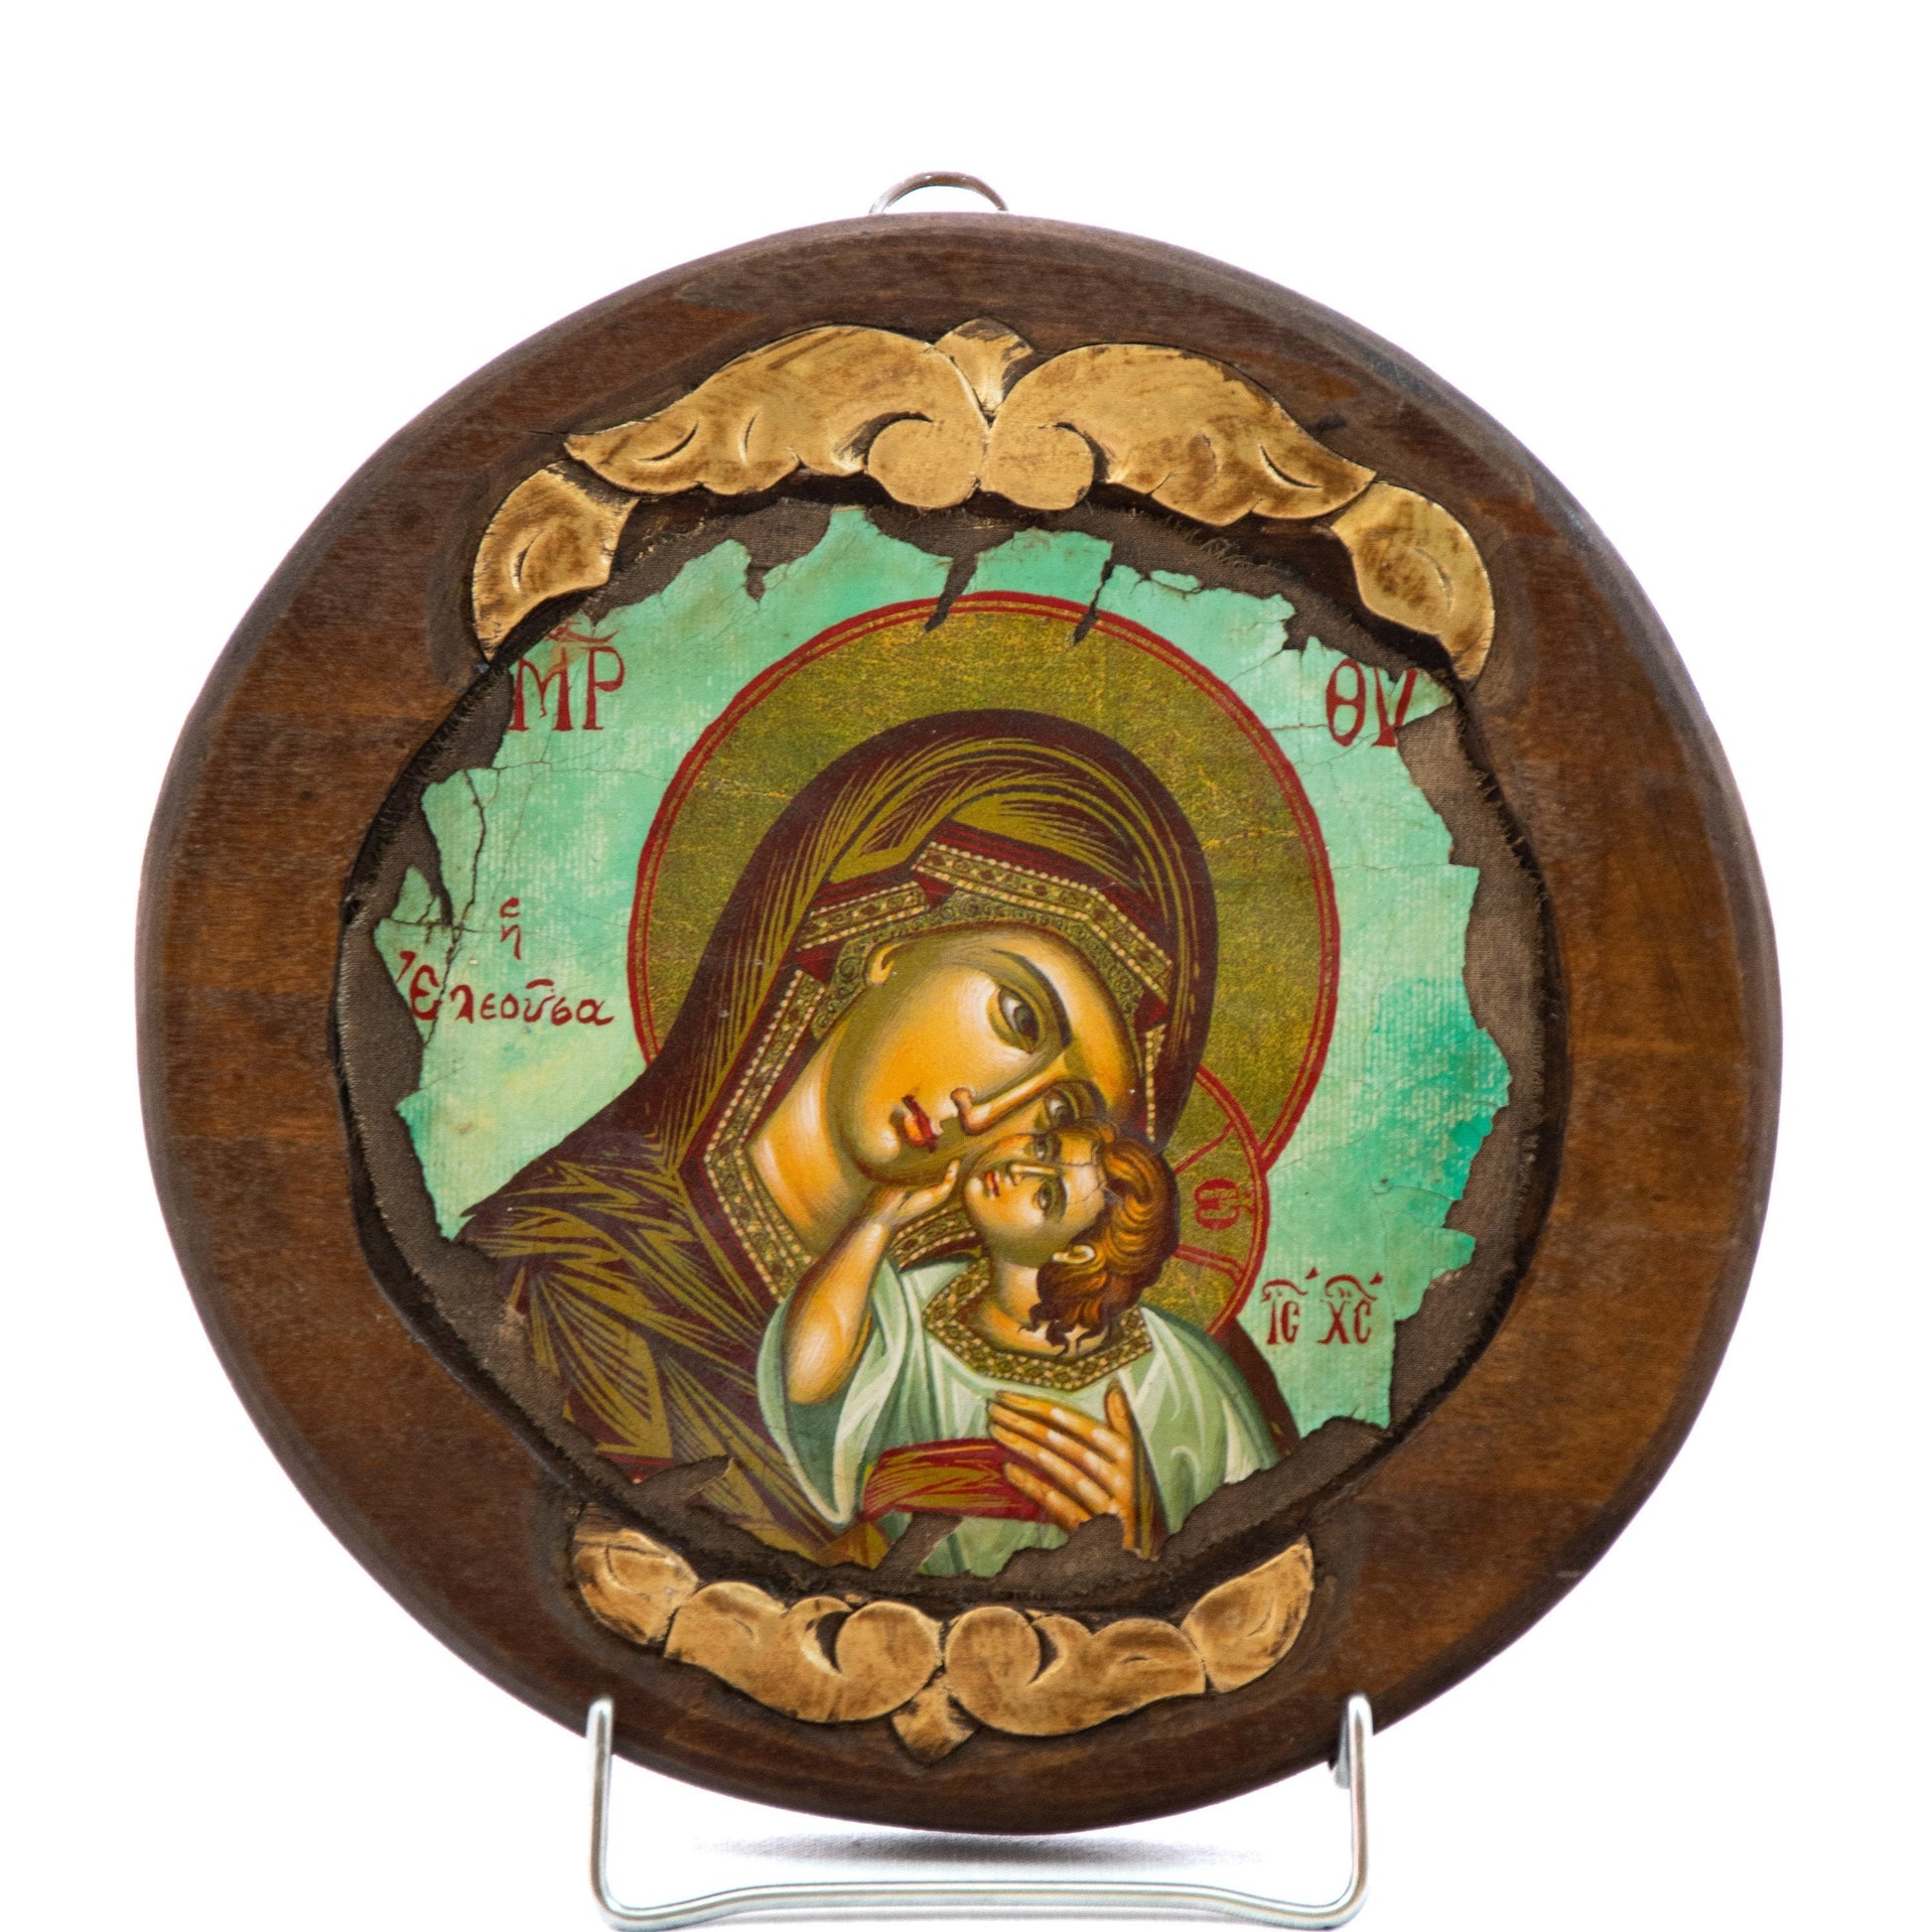 Virgin Mary icon Panagia, Greek Christian Orthodox icon Theotokos, Mother of God Byzantine art wall hanging wood plaque, gift idea 21x21cm TheHolyArt